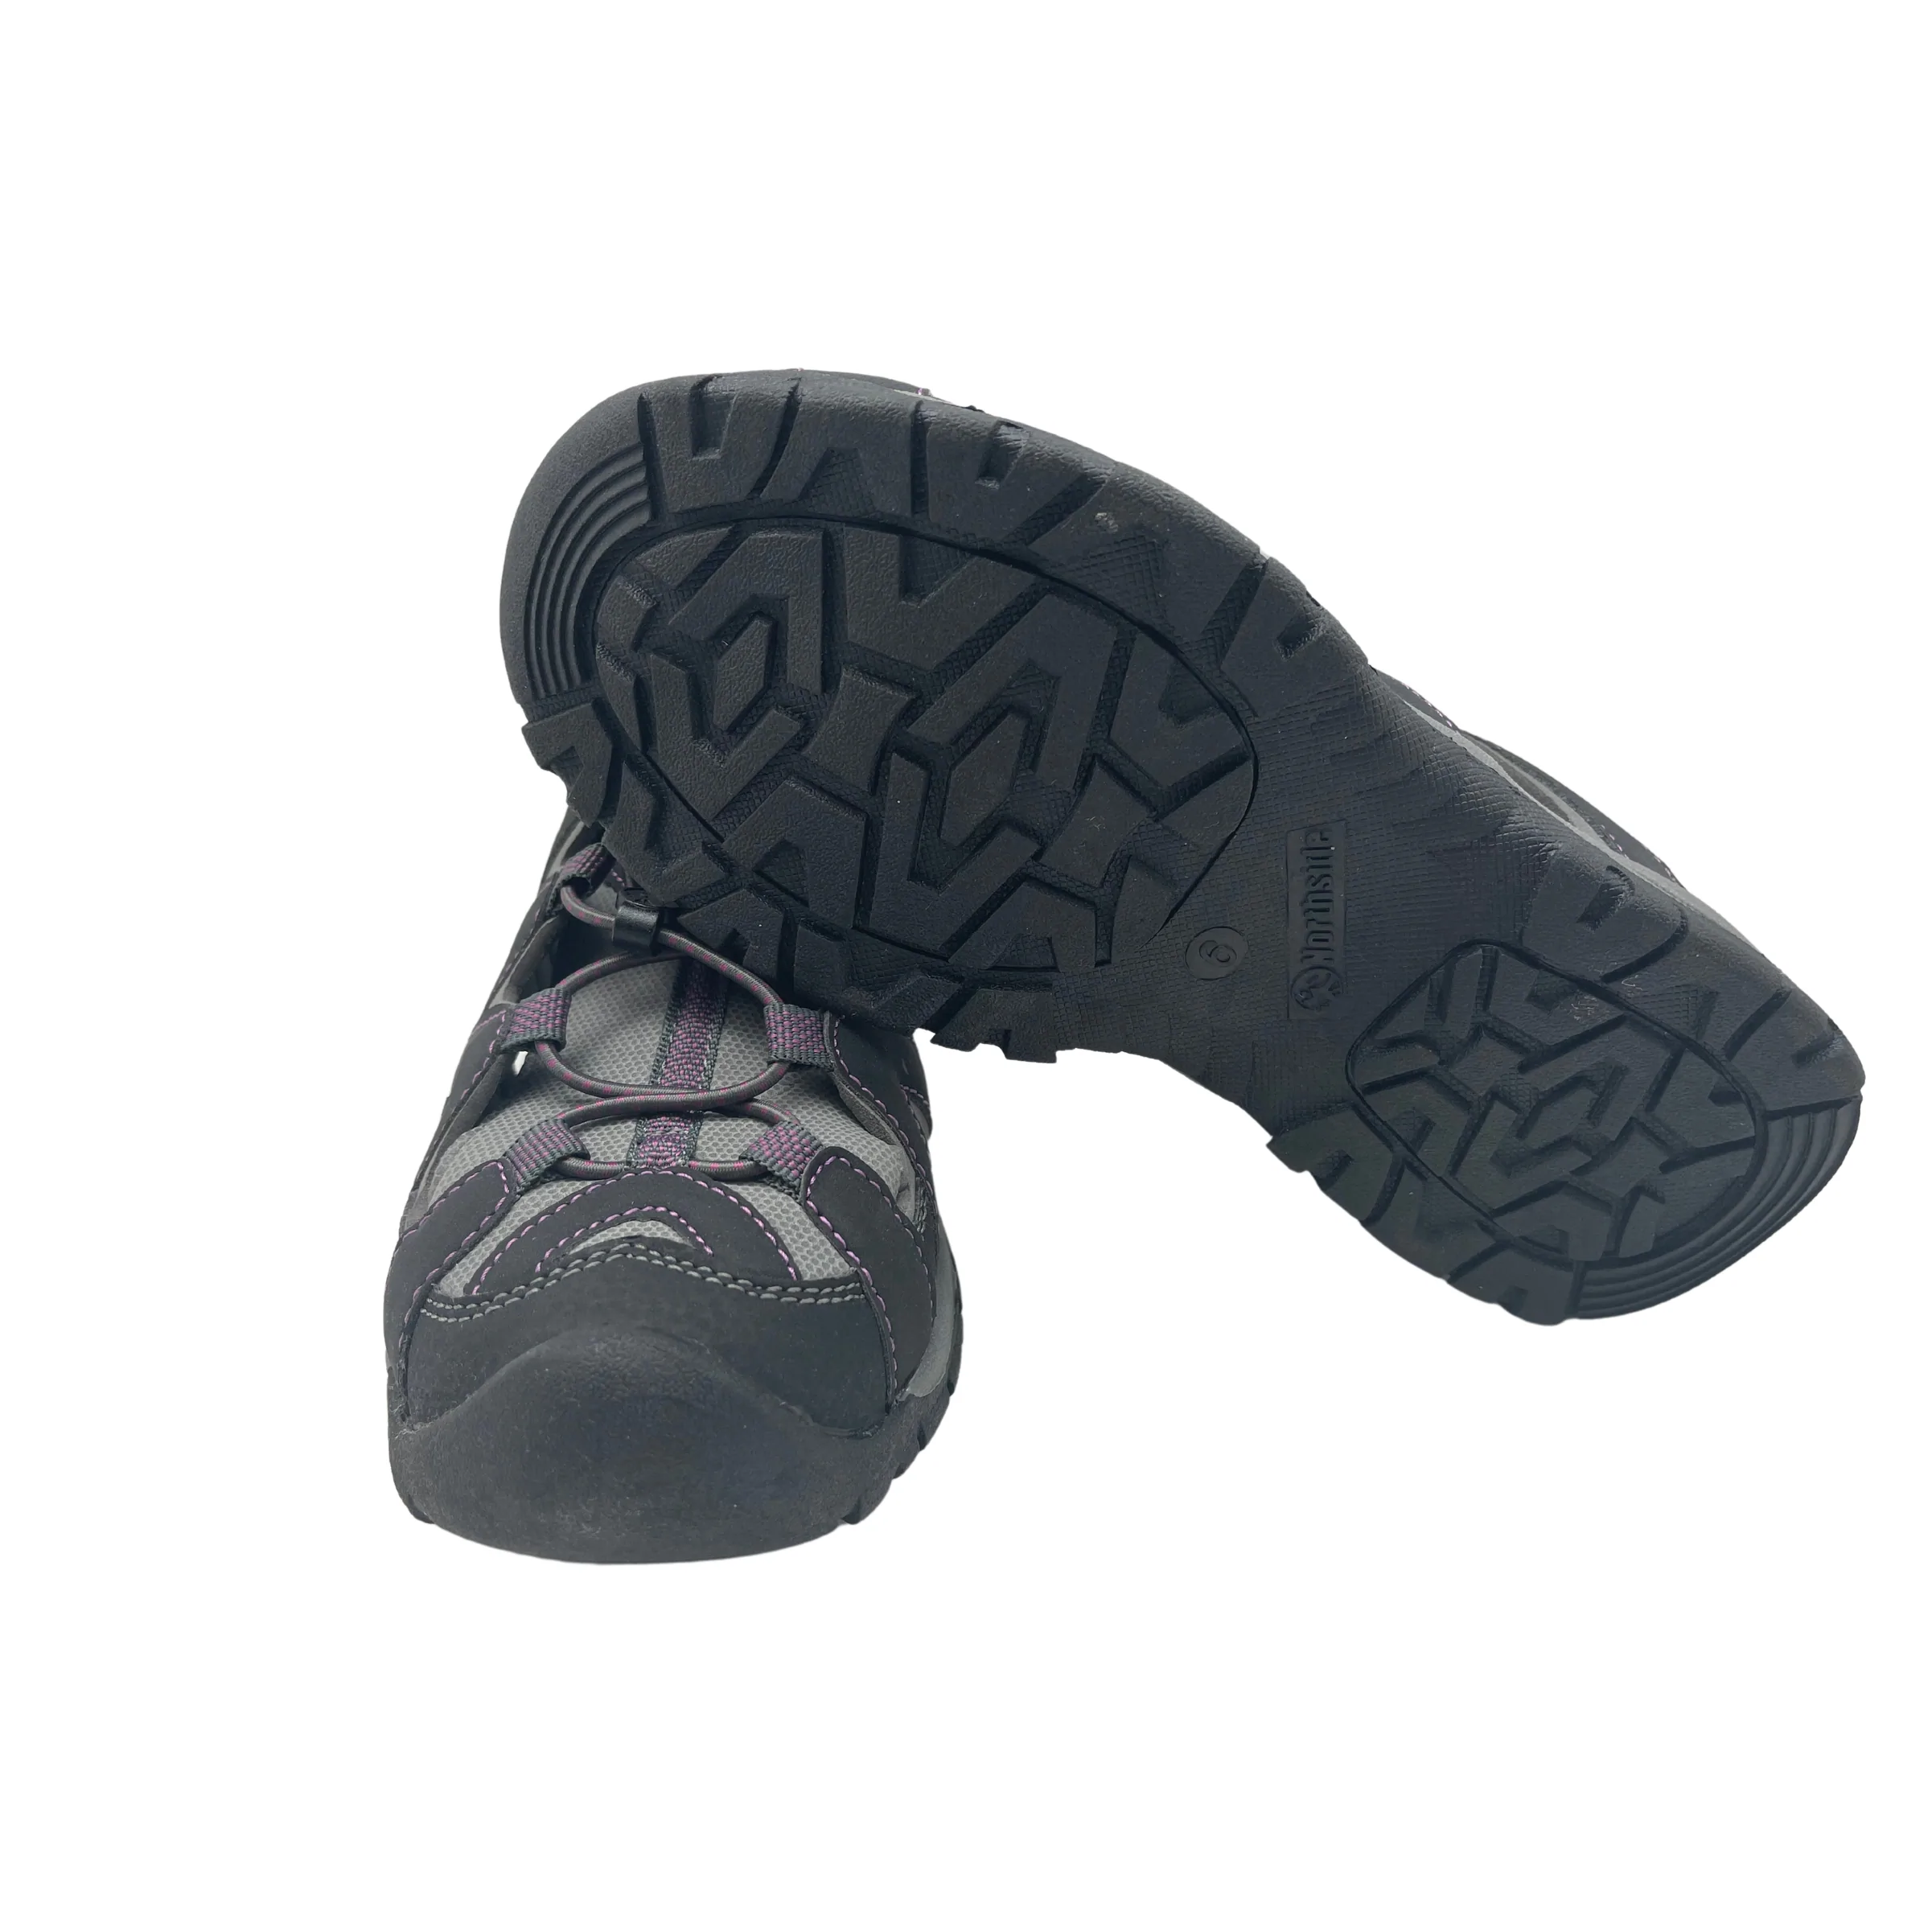 North Side Women's Sandals / Black with Purple / Sport Sandal / Size 6